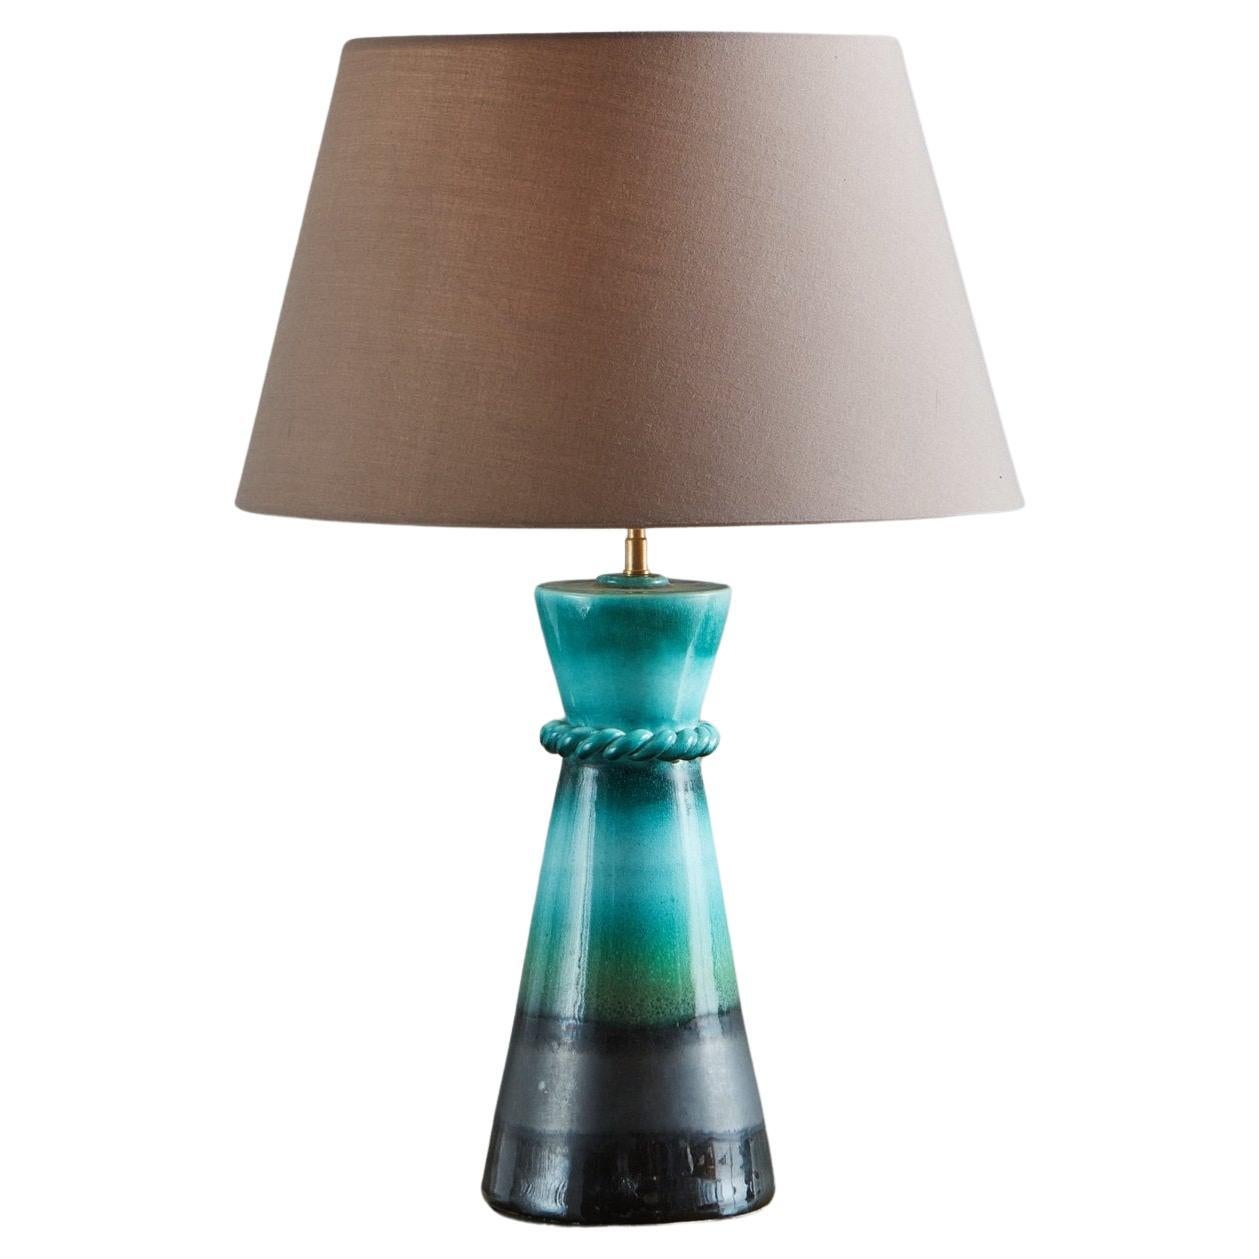 Blue Glazed Ceramic Table Lamp, France 1940s For Sale